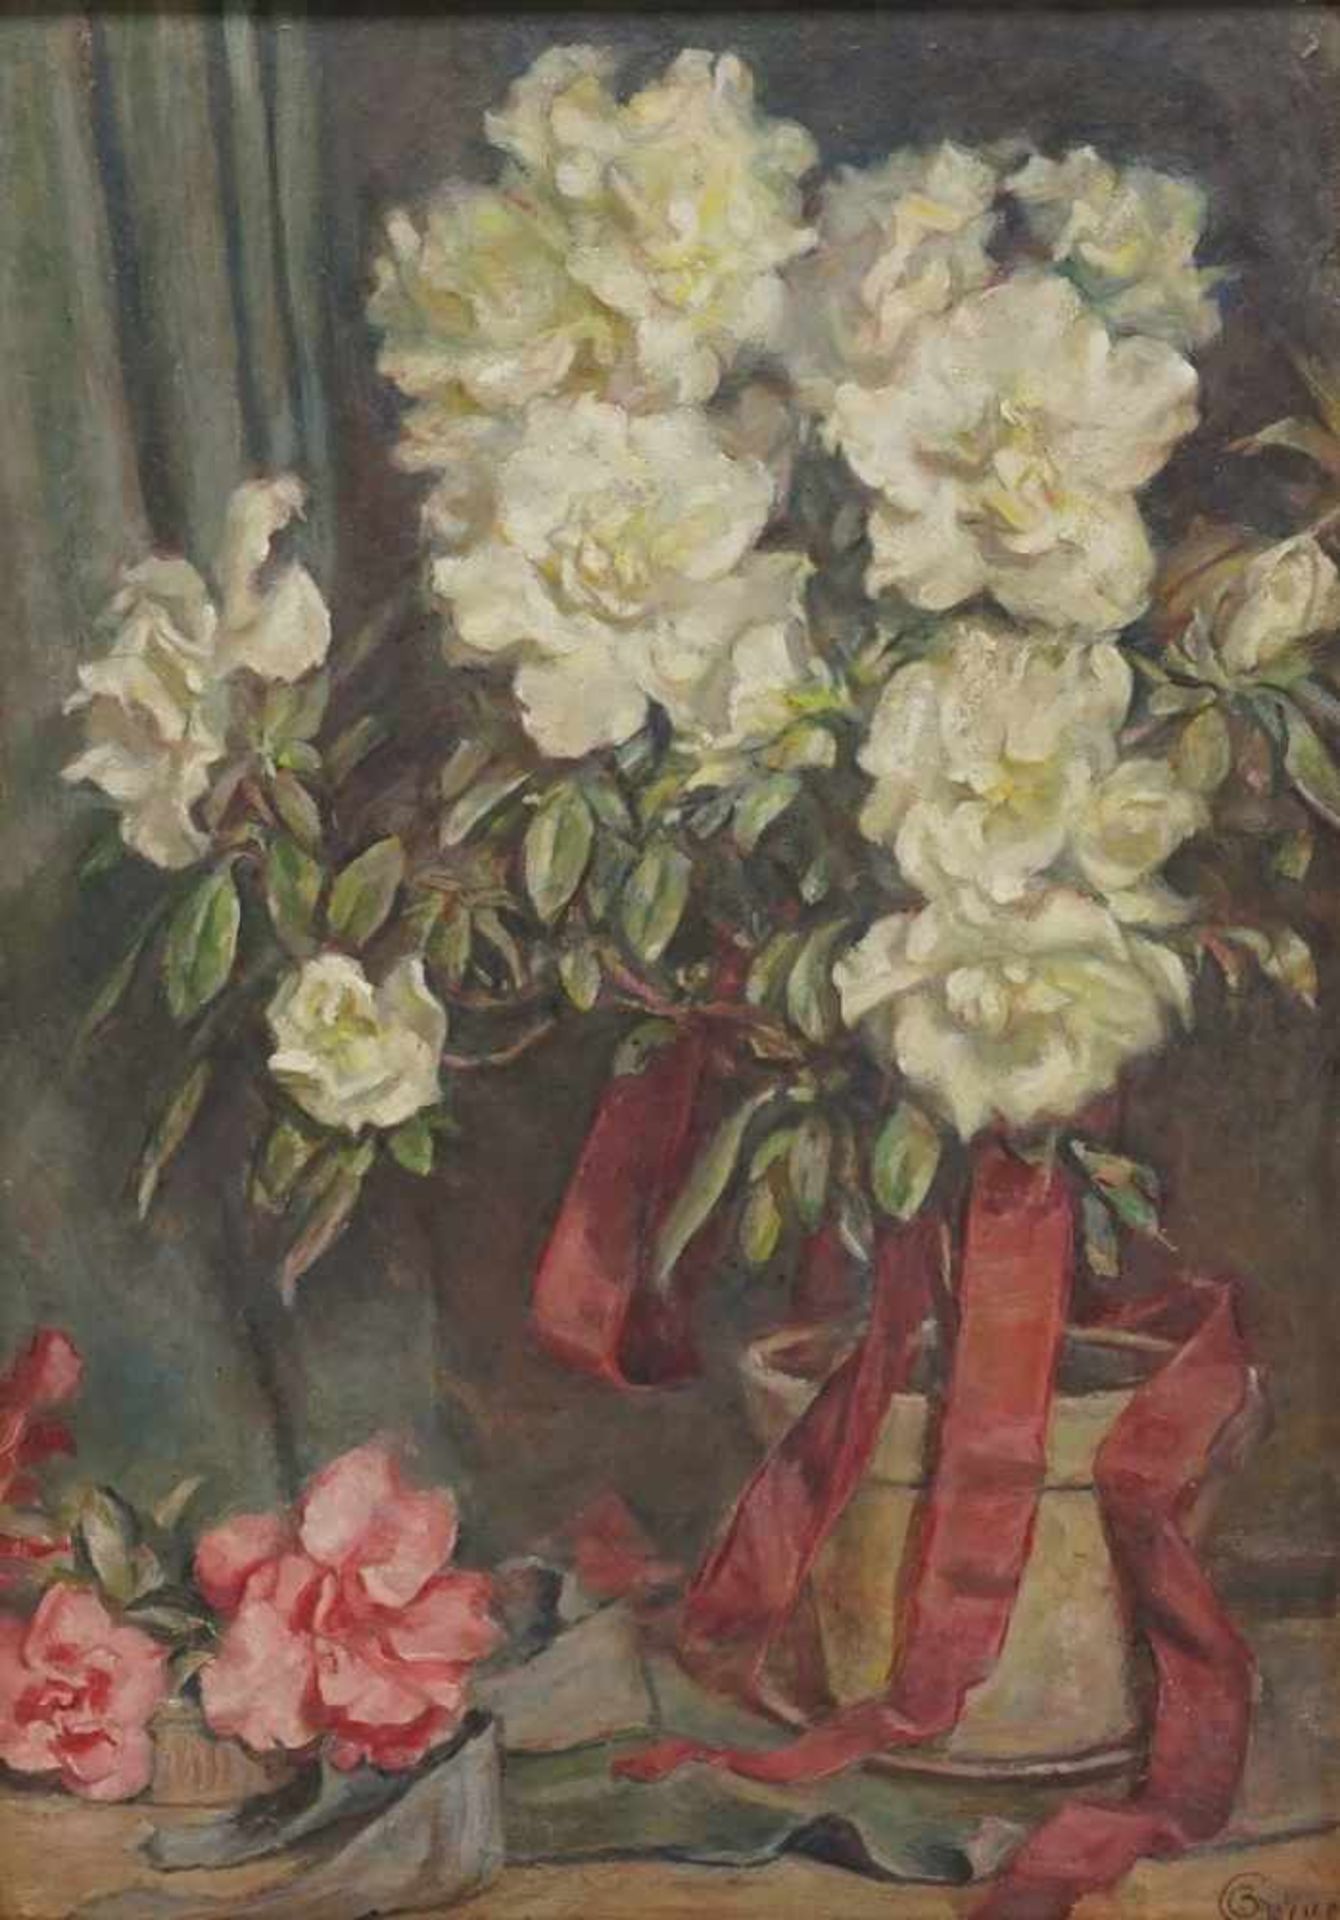 C. Görner, "Rosen im Topf"